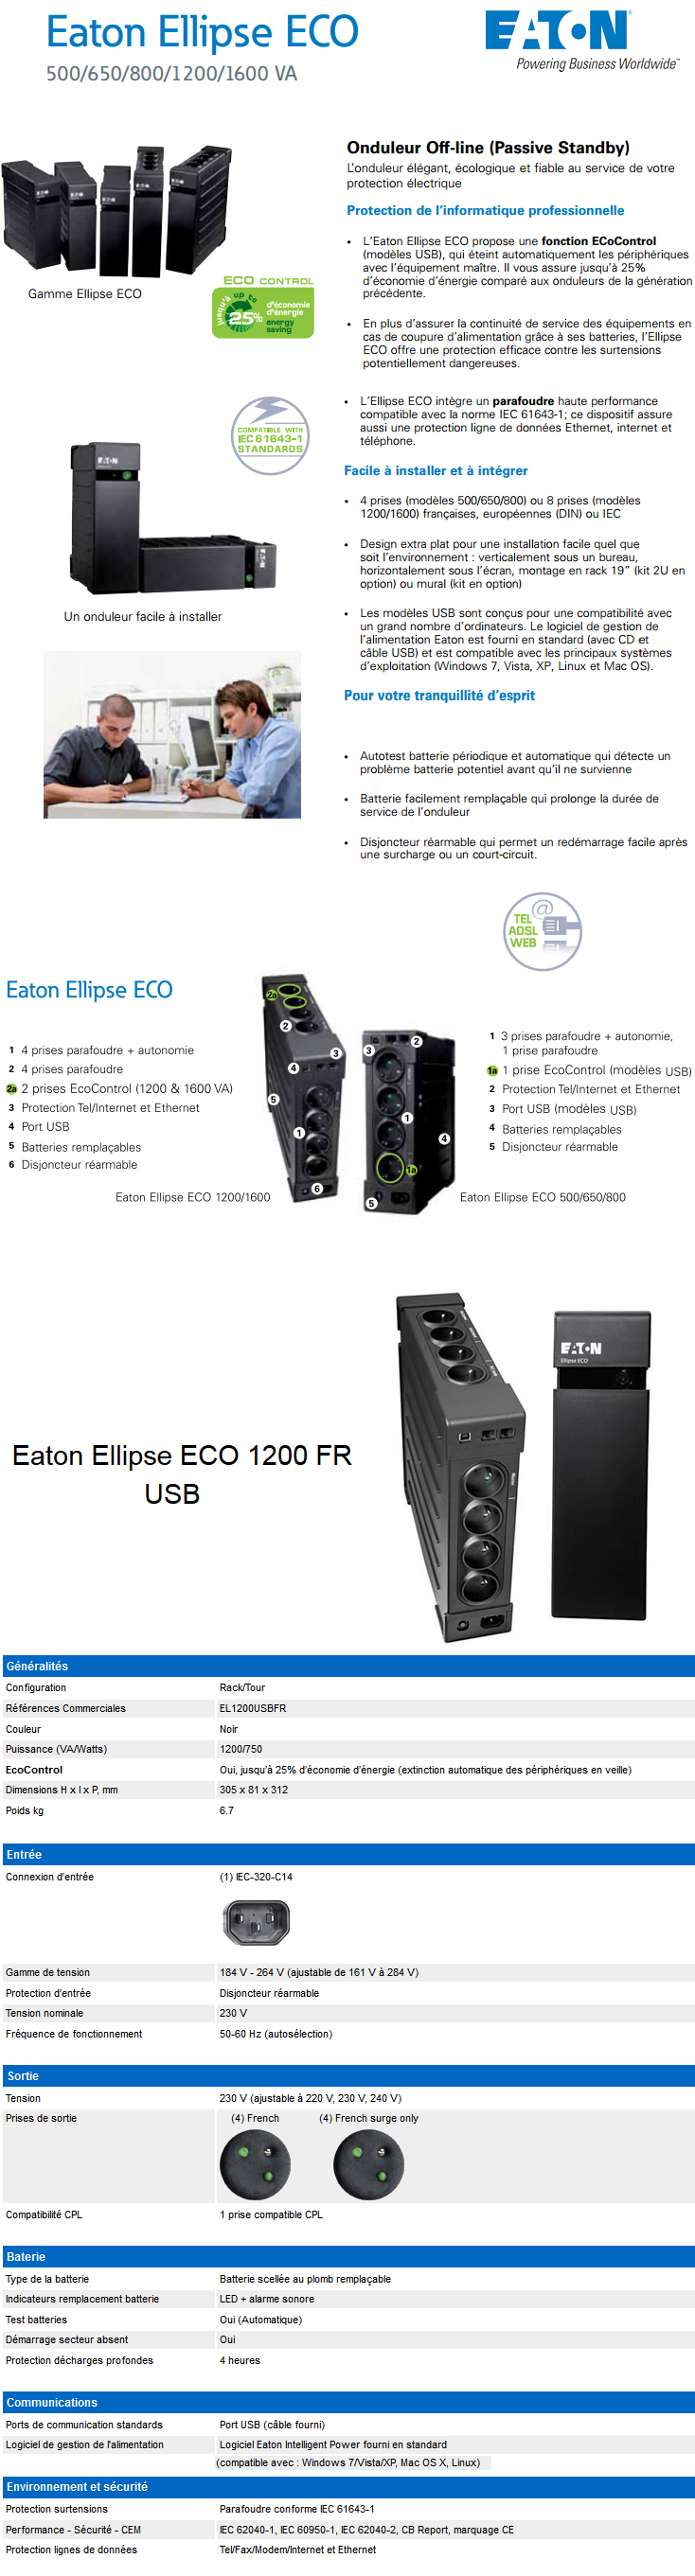 Acheter Onduleur OFF-Line Eaton Ellipse ECO 1200 FR USB (EL1200USBFR) maroc